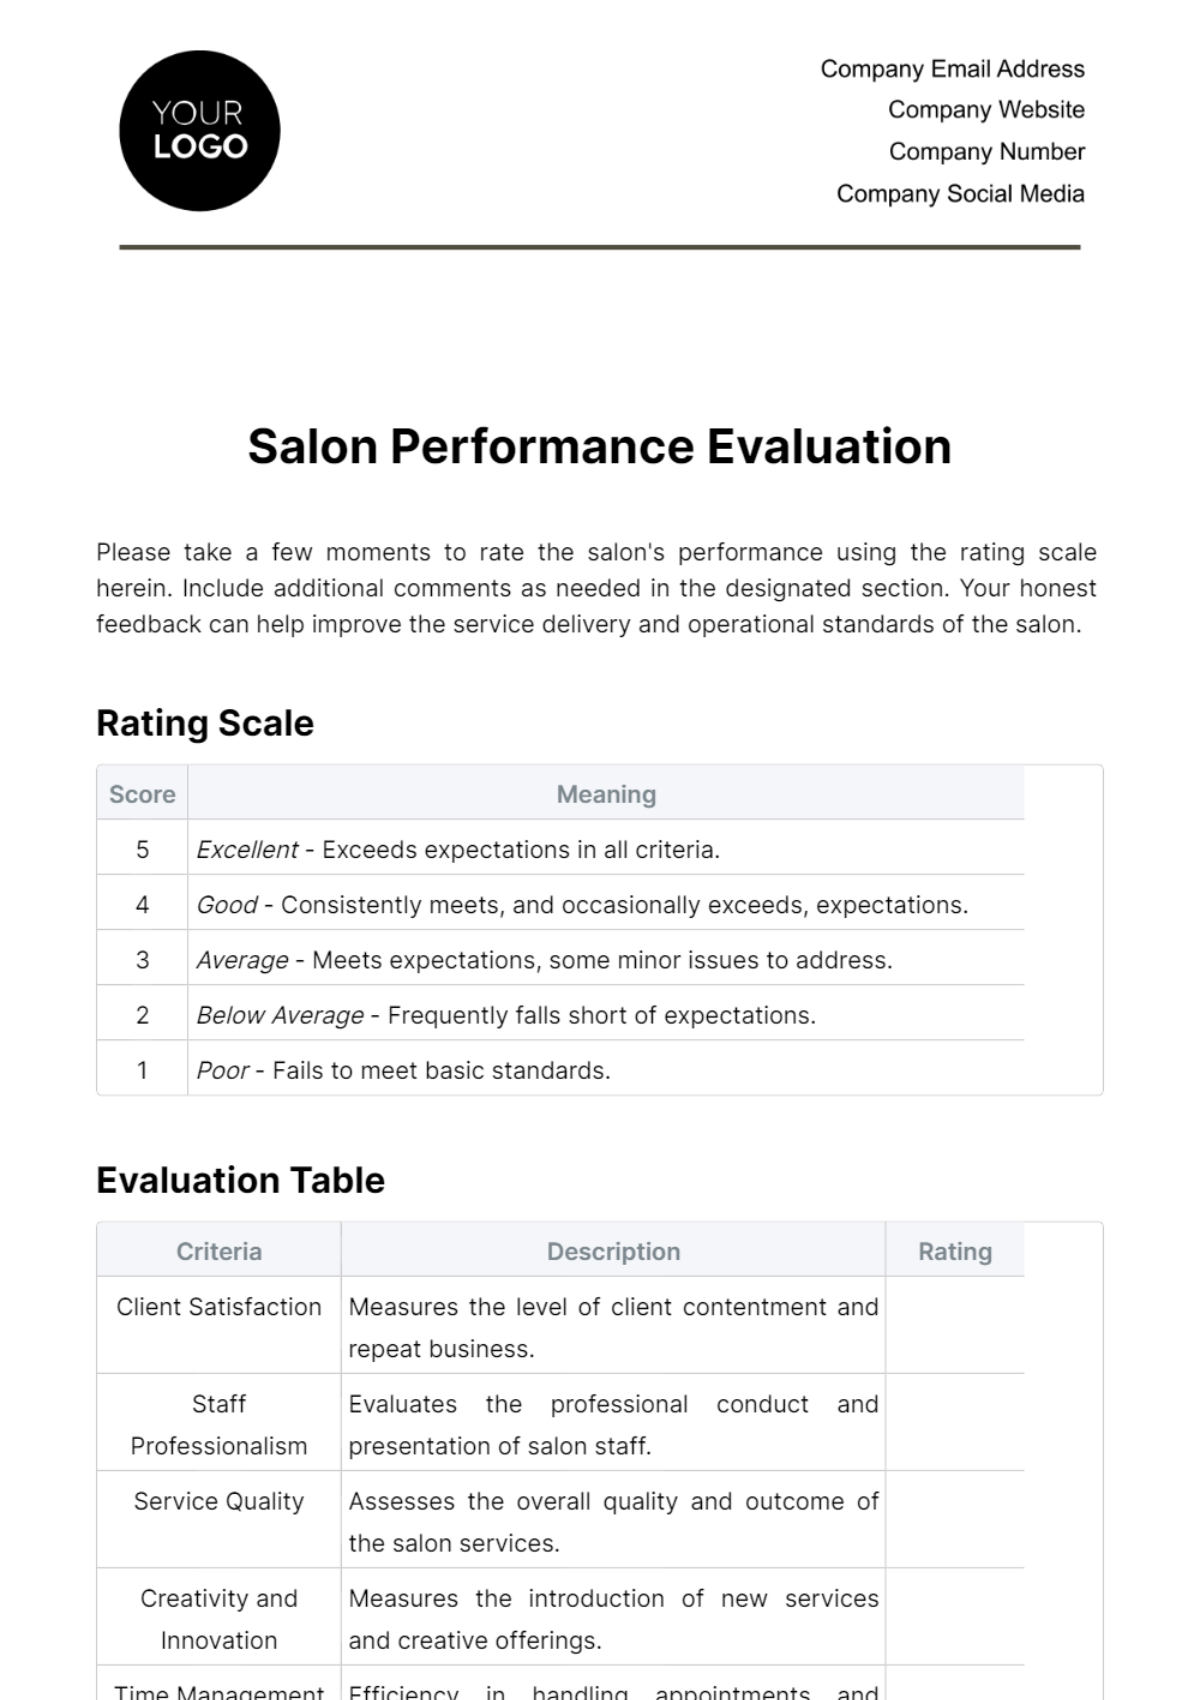 Free Salon Performance Evaluation Template